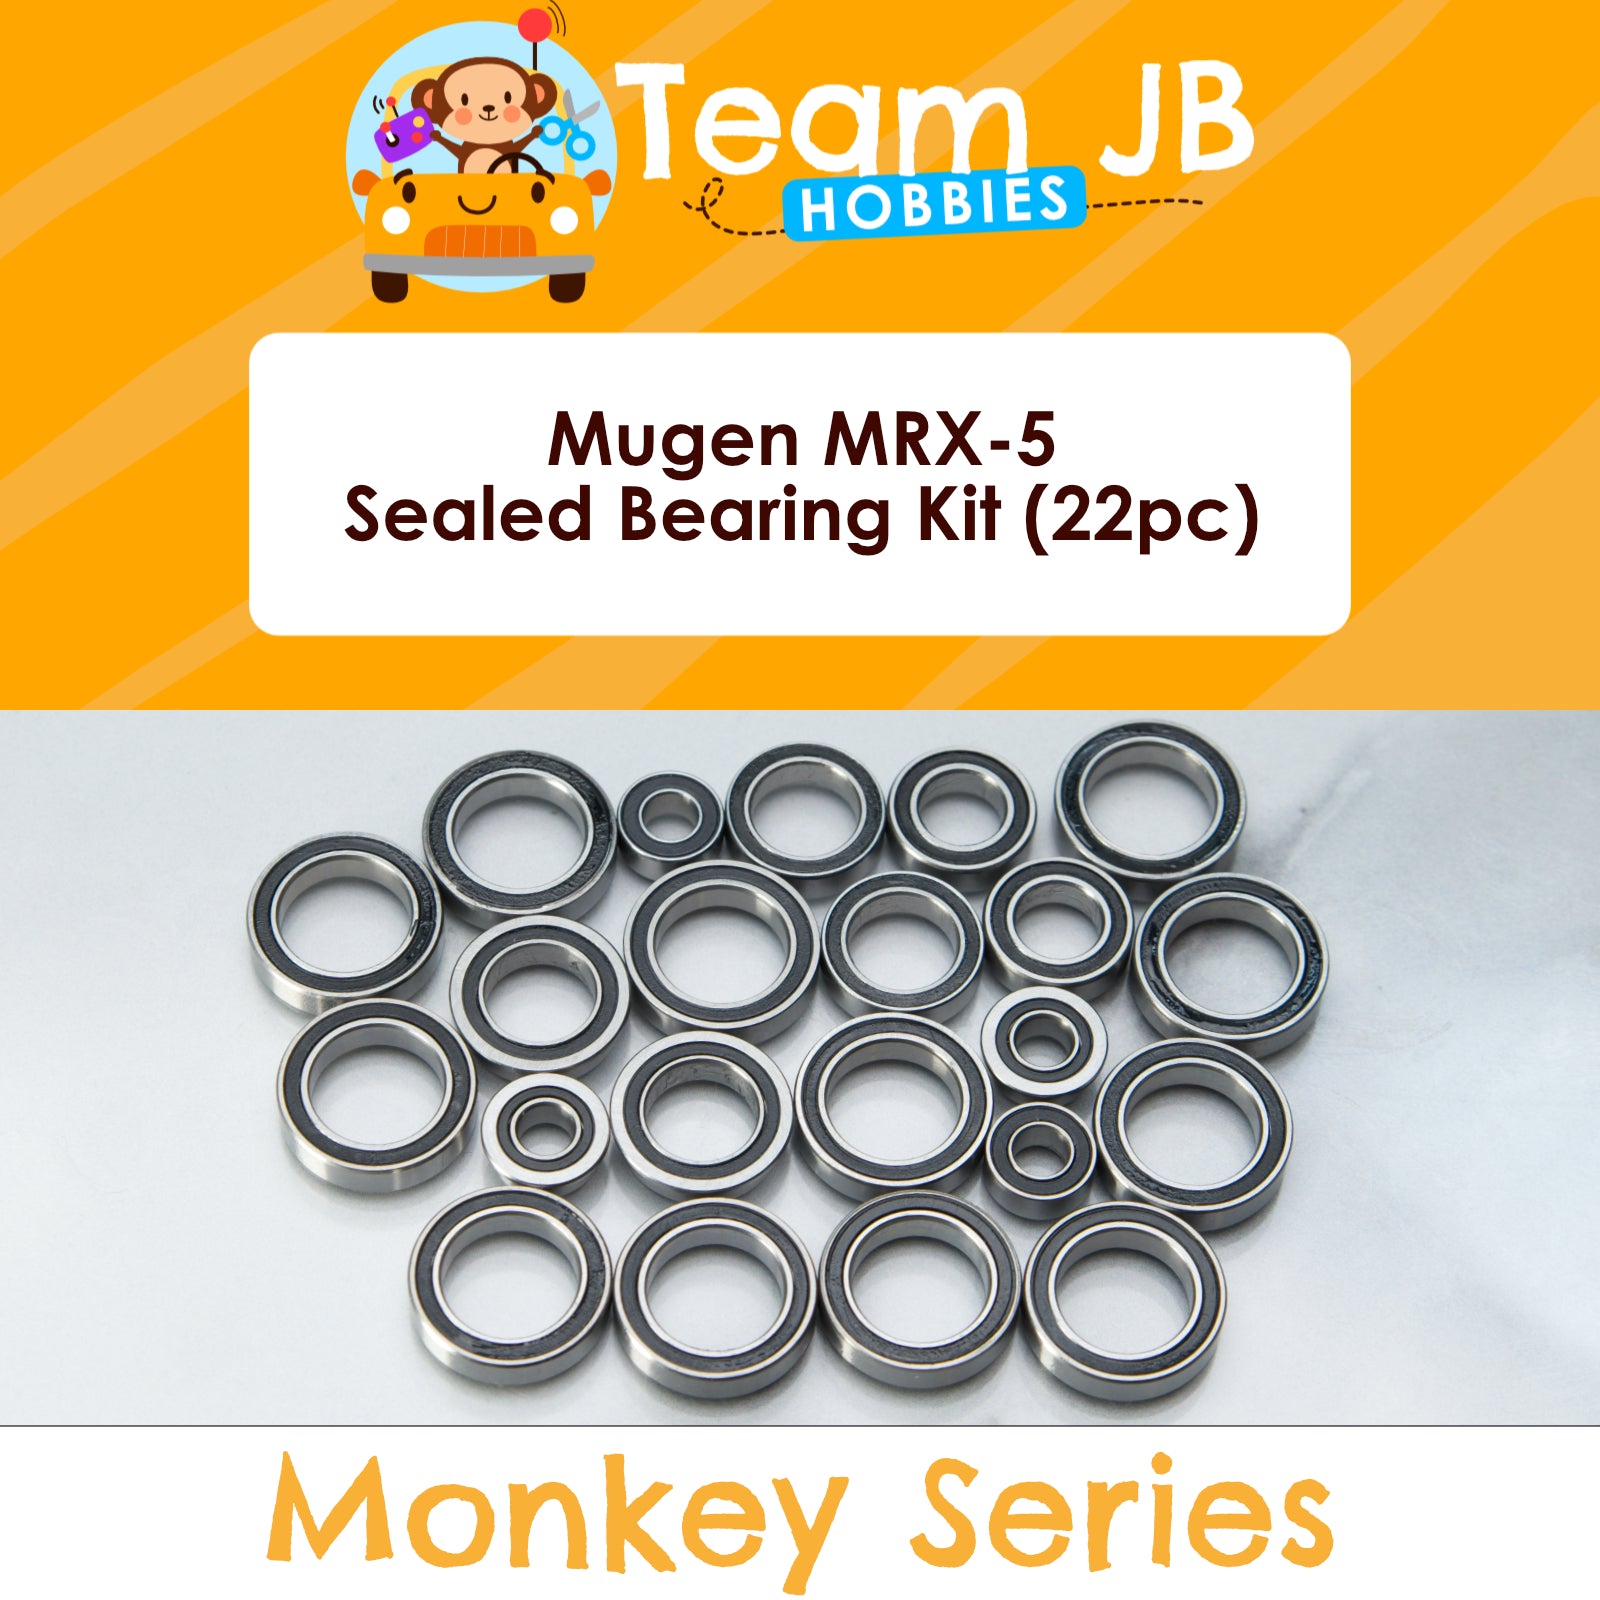 Mugen MRX-5 - Sealed Bearing Kit